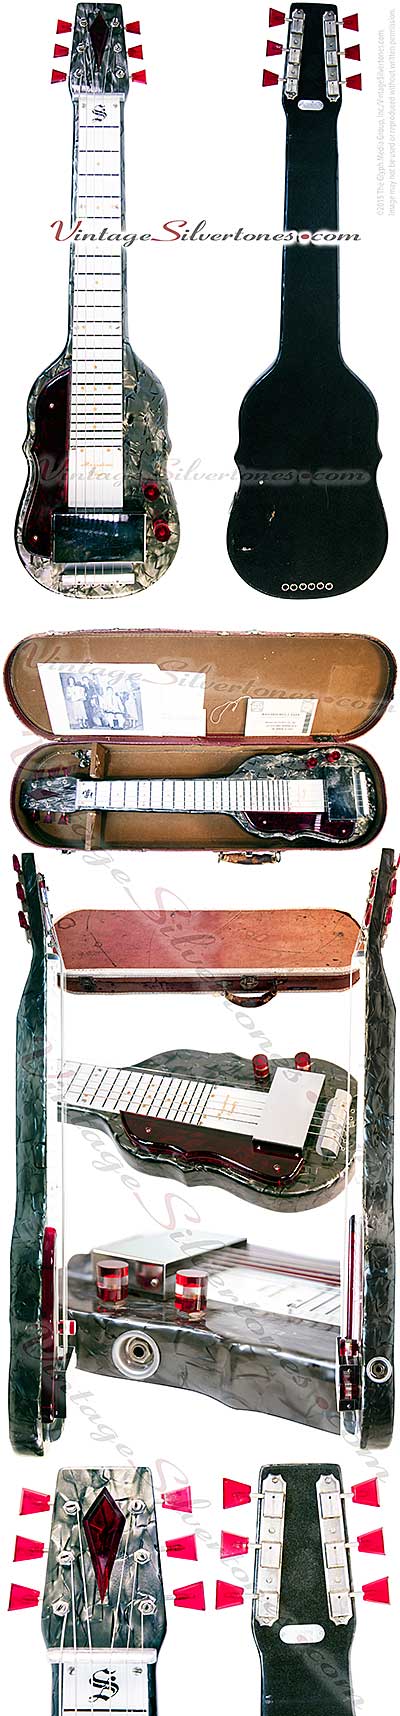 Magnatone G55 - 1 pickup, lap steel guitar made in CA, USA circa 1958